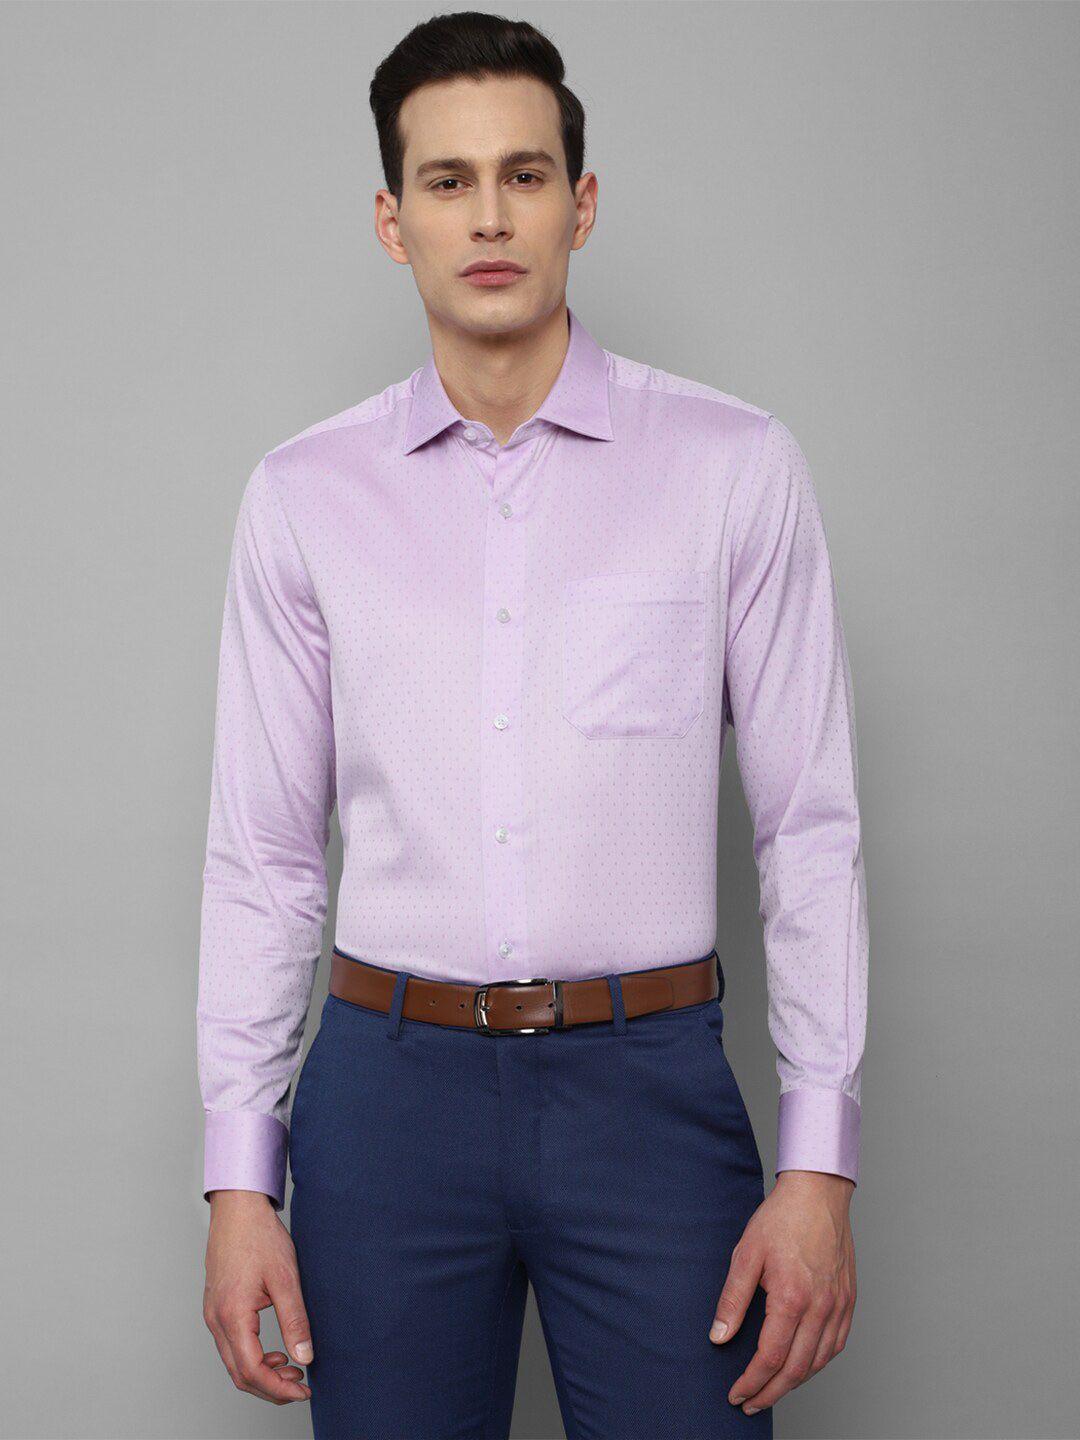 louis philippe men's purple formal shirt